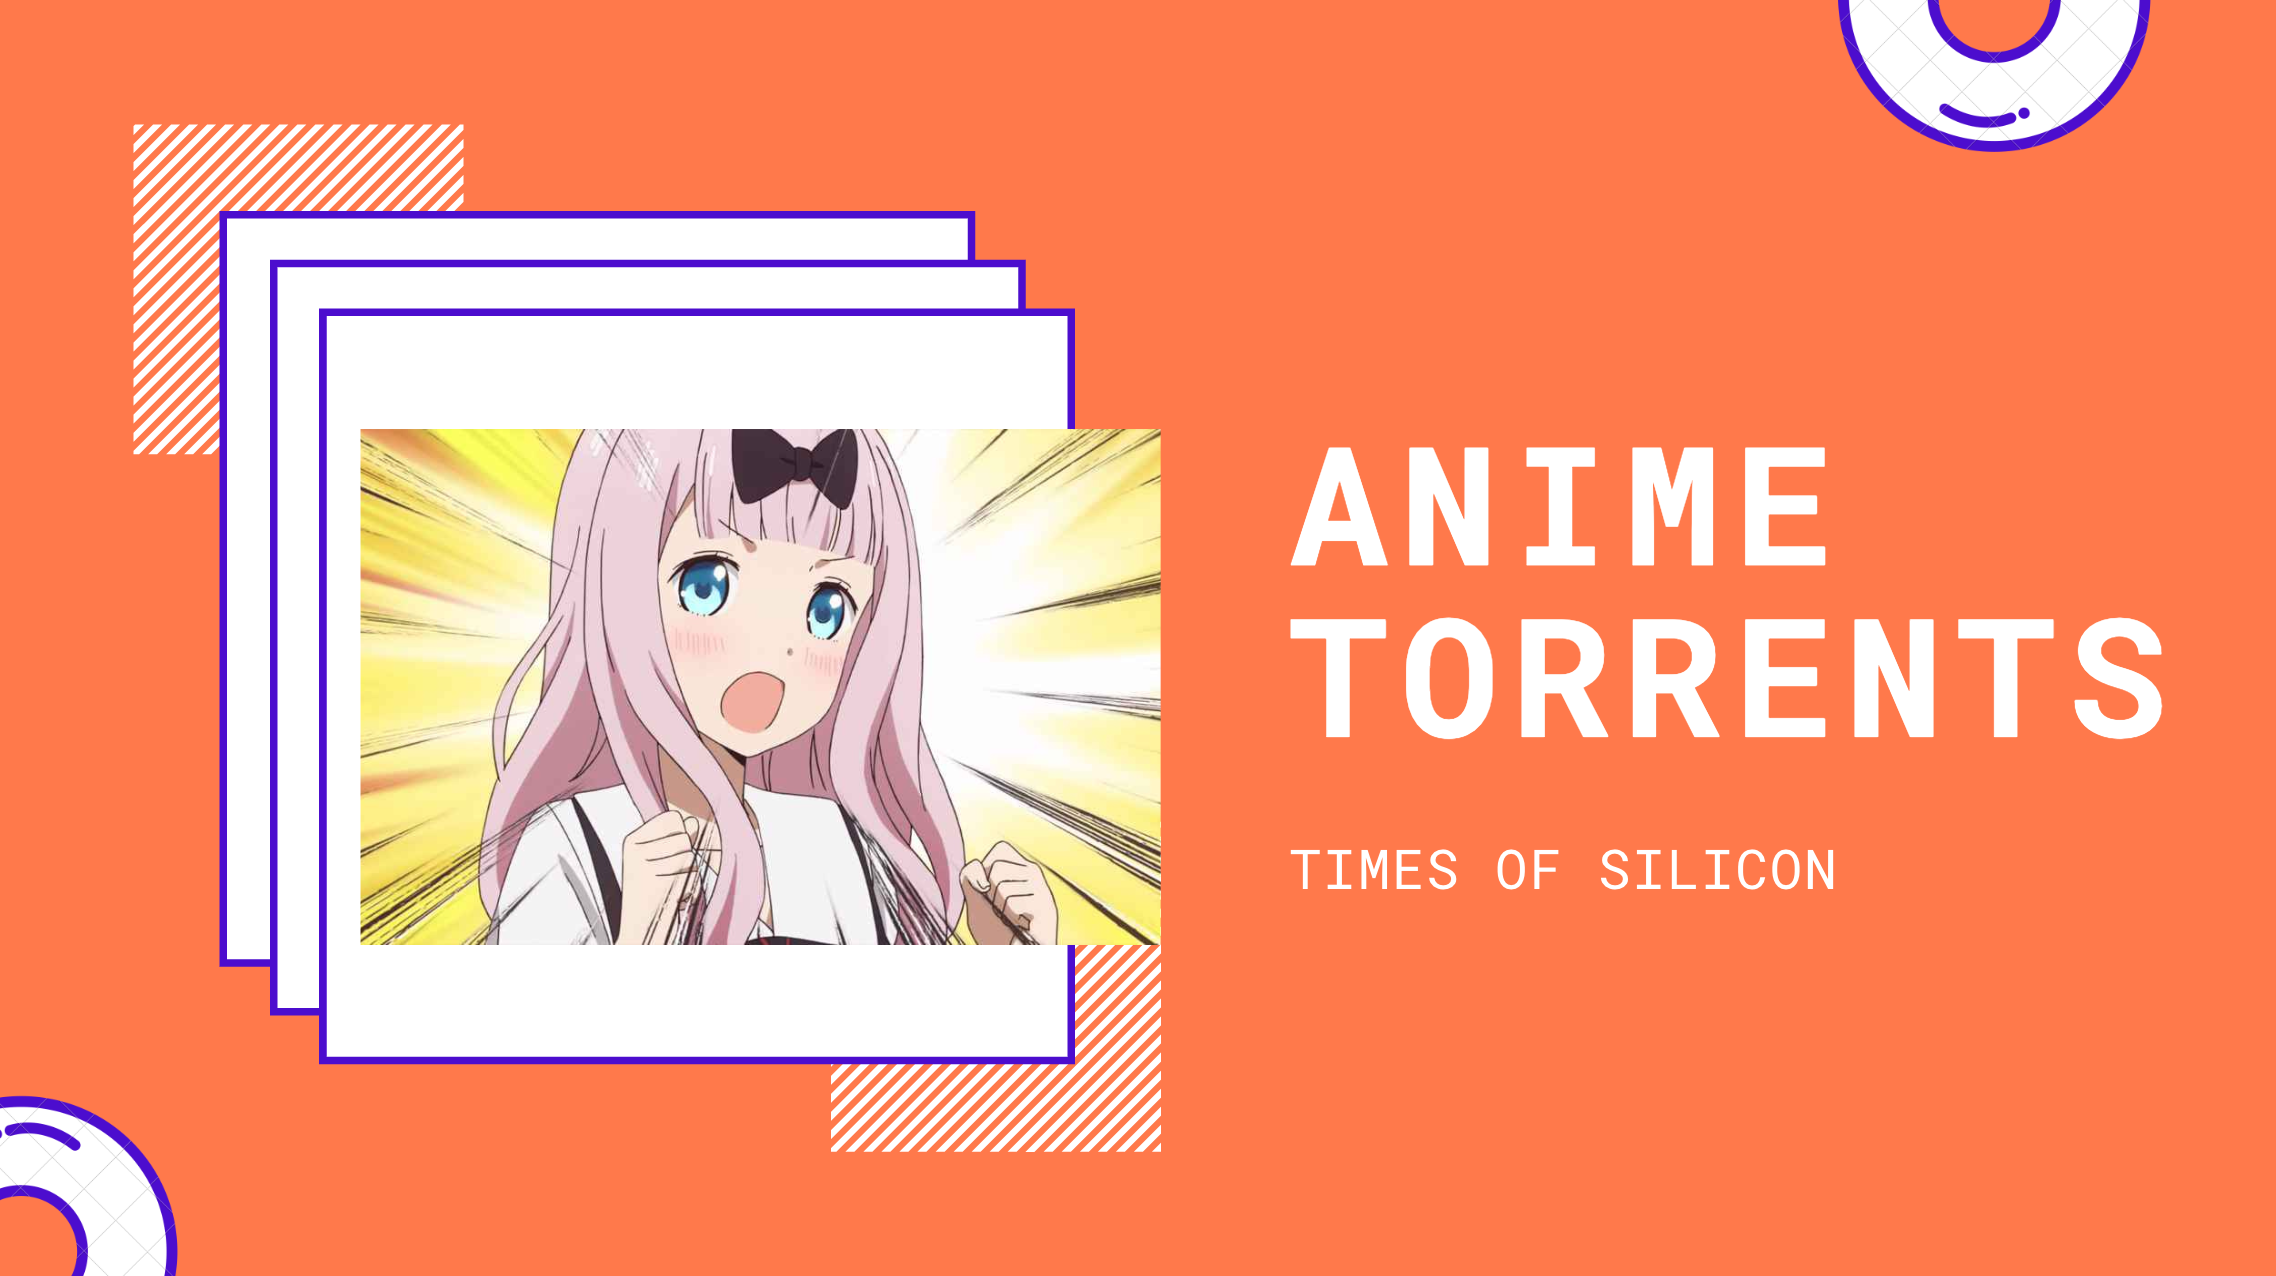 best anime torrents